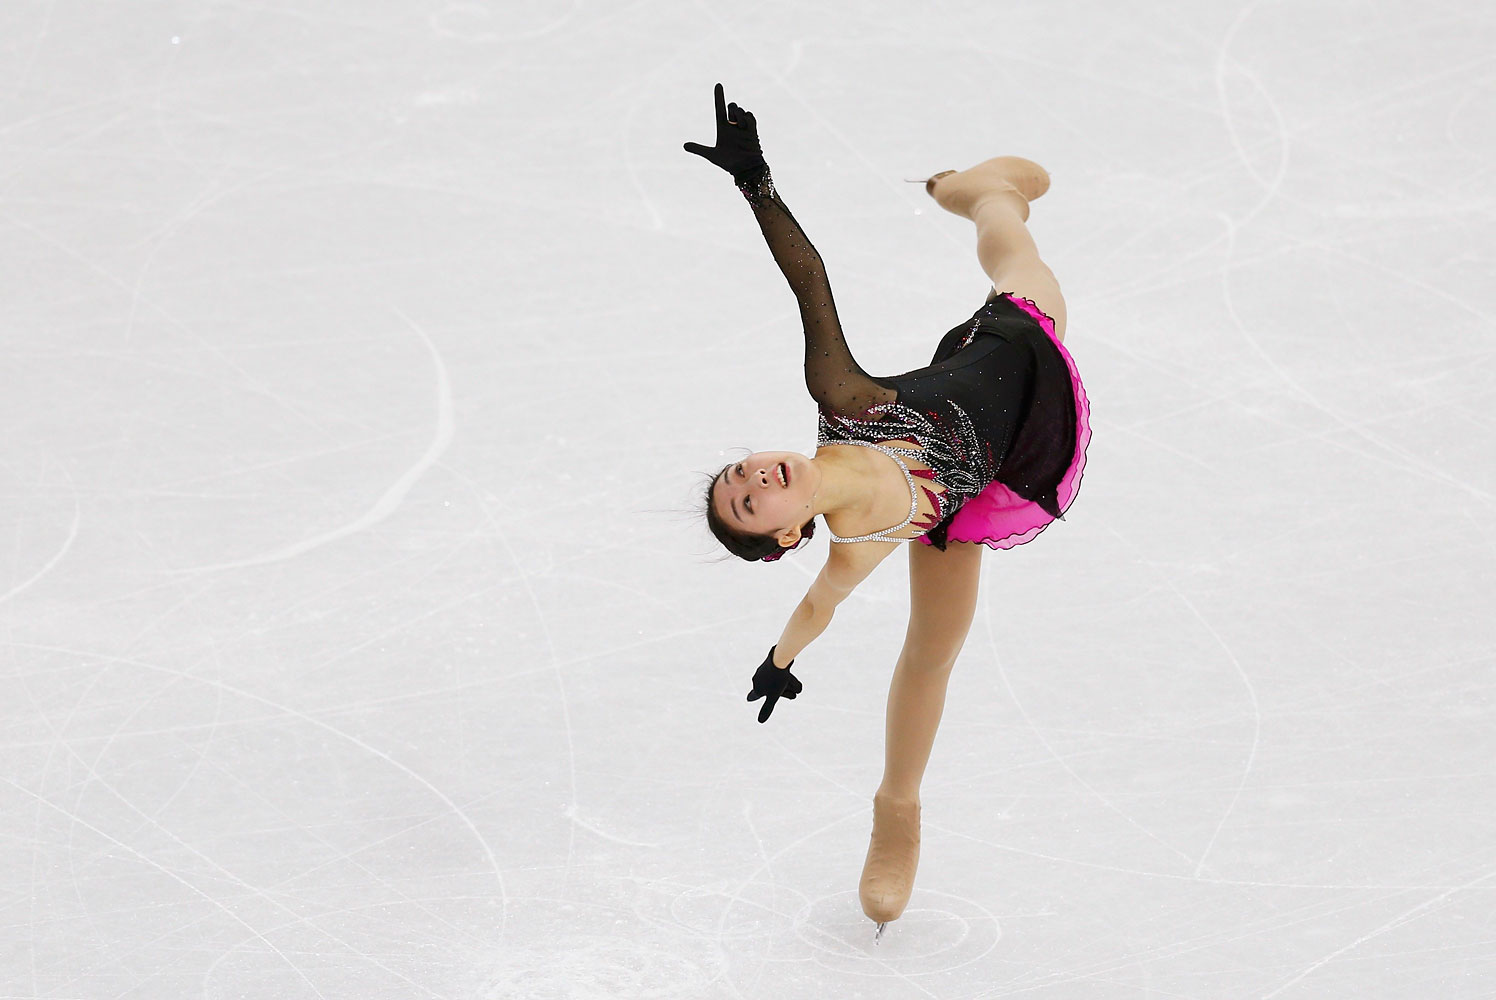 China's Zijun Li competes during the Figure Skating Women's Short Program at the Sochi 2014 Winter Olympics, Feb. 19, 2014 (Issei Kato / Reuters)